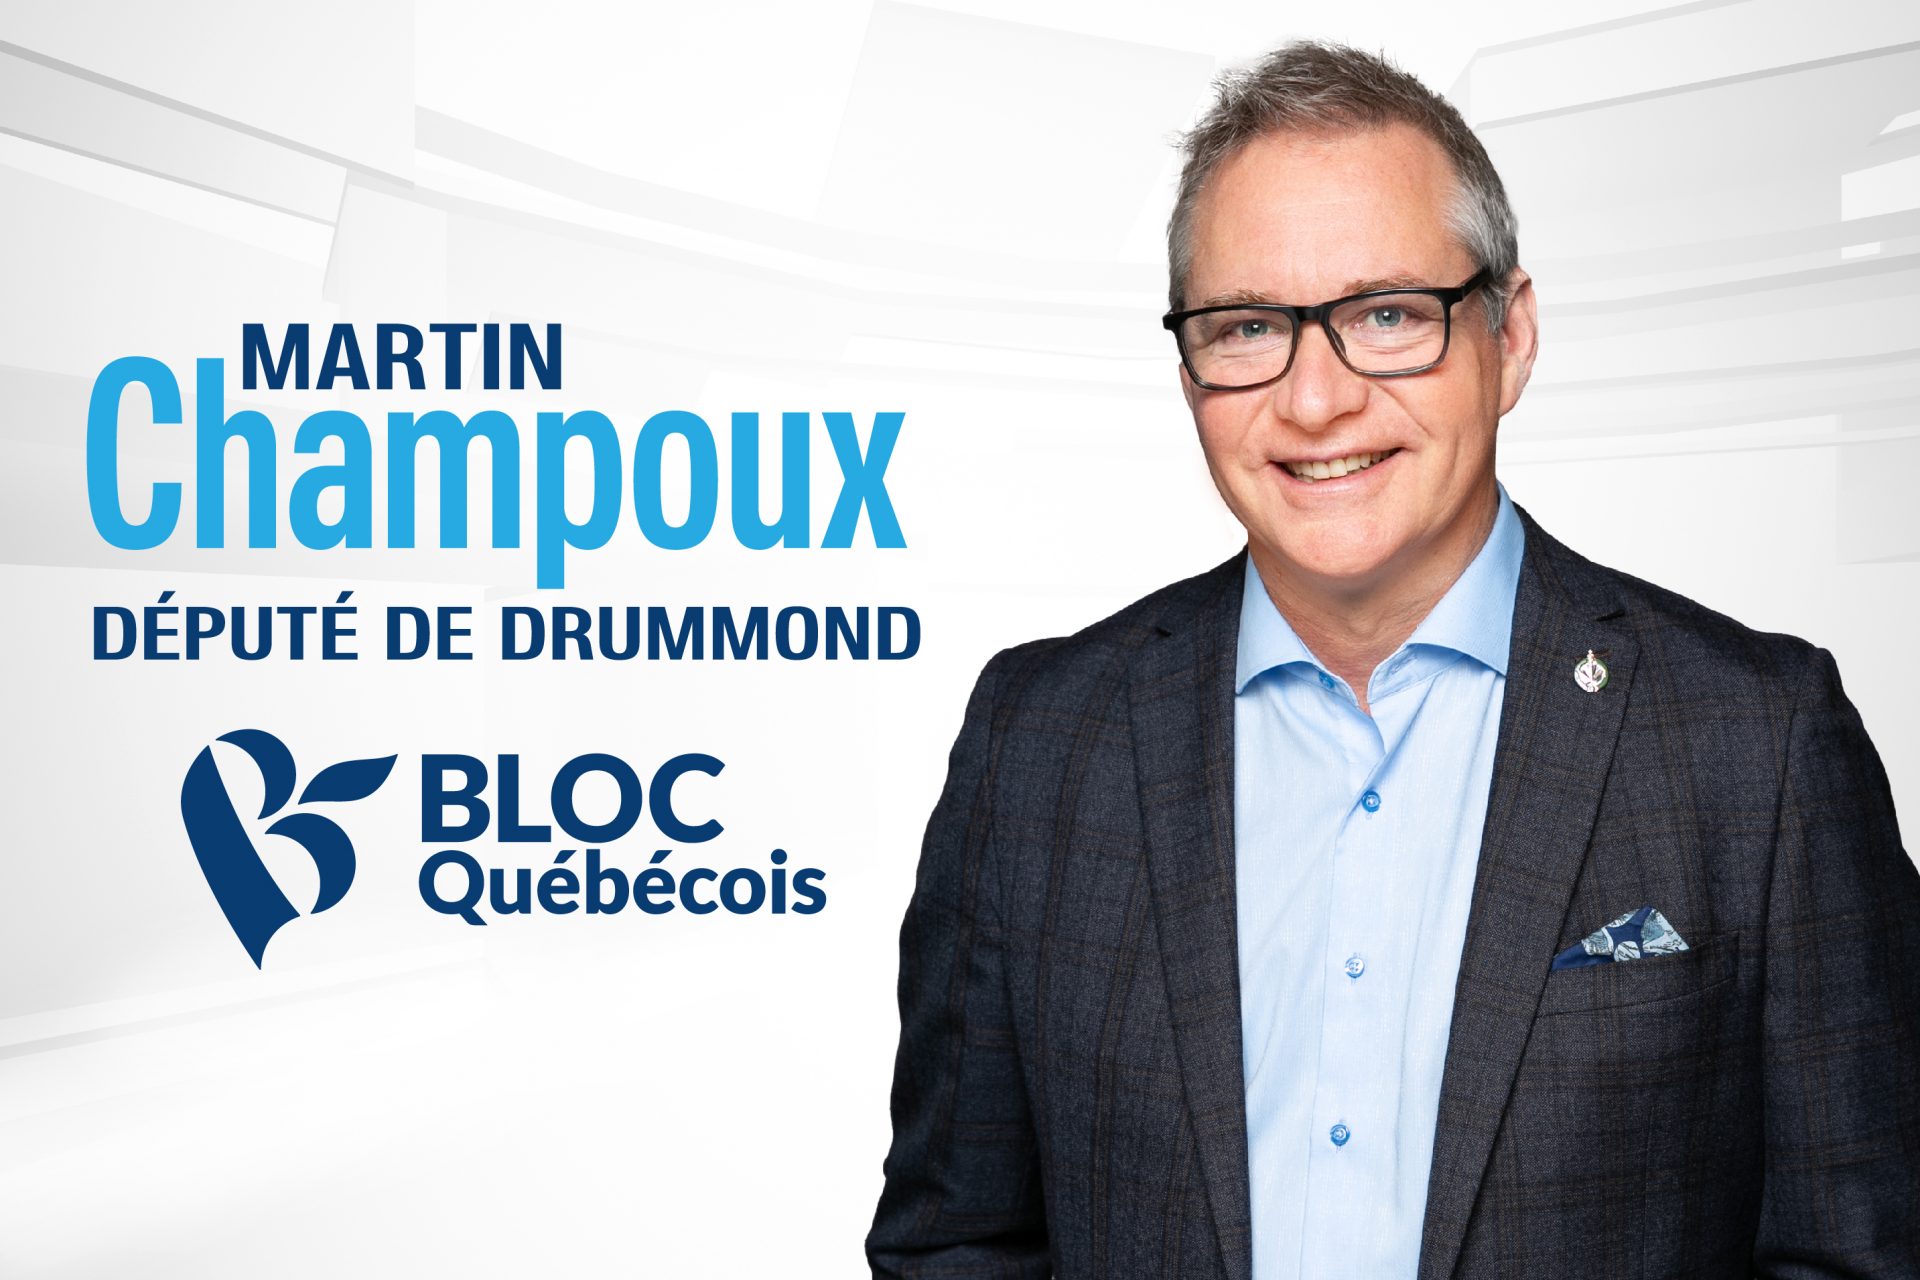 Martin Champoux